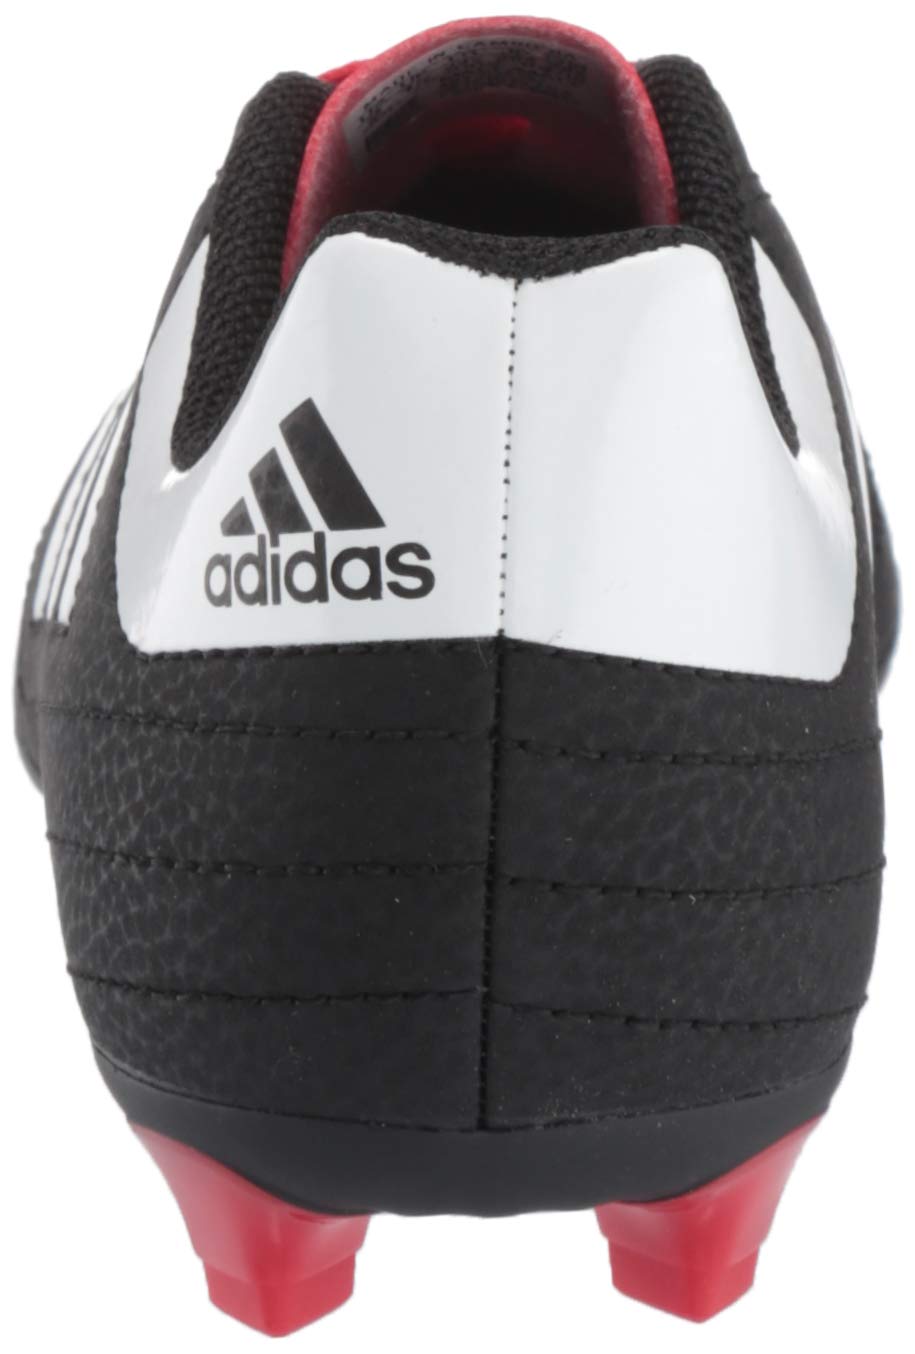 adidas Unisex-Kid's Goletto VI Firm Ground Football Shoe, Black/White/Scarlet, 10.5K M US Little Kid